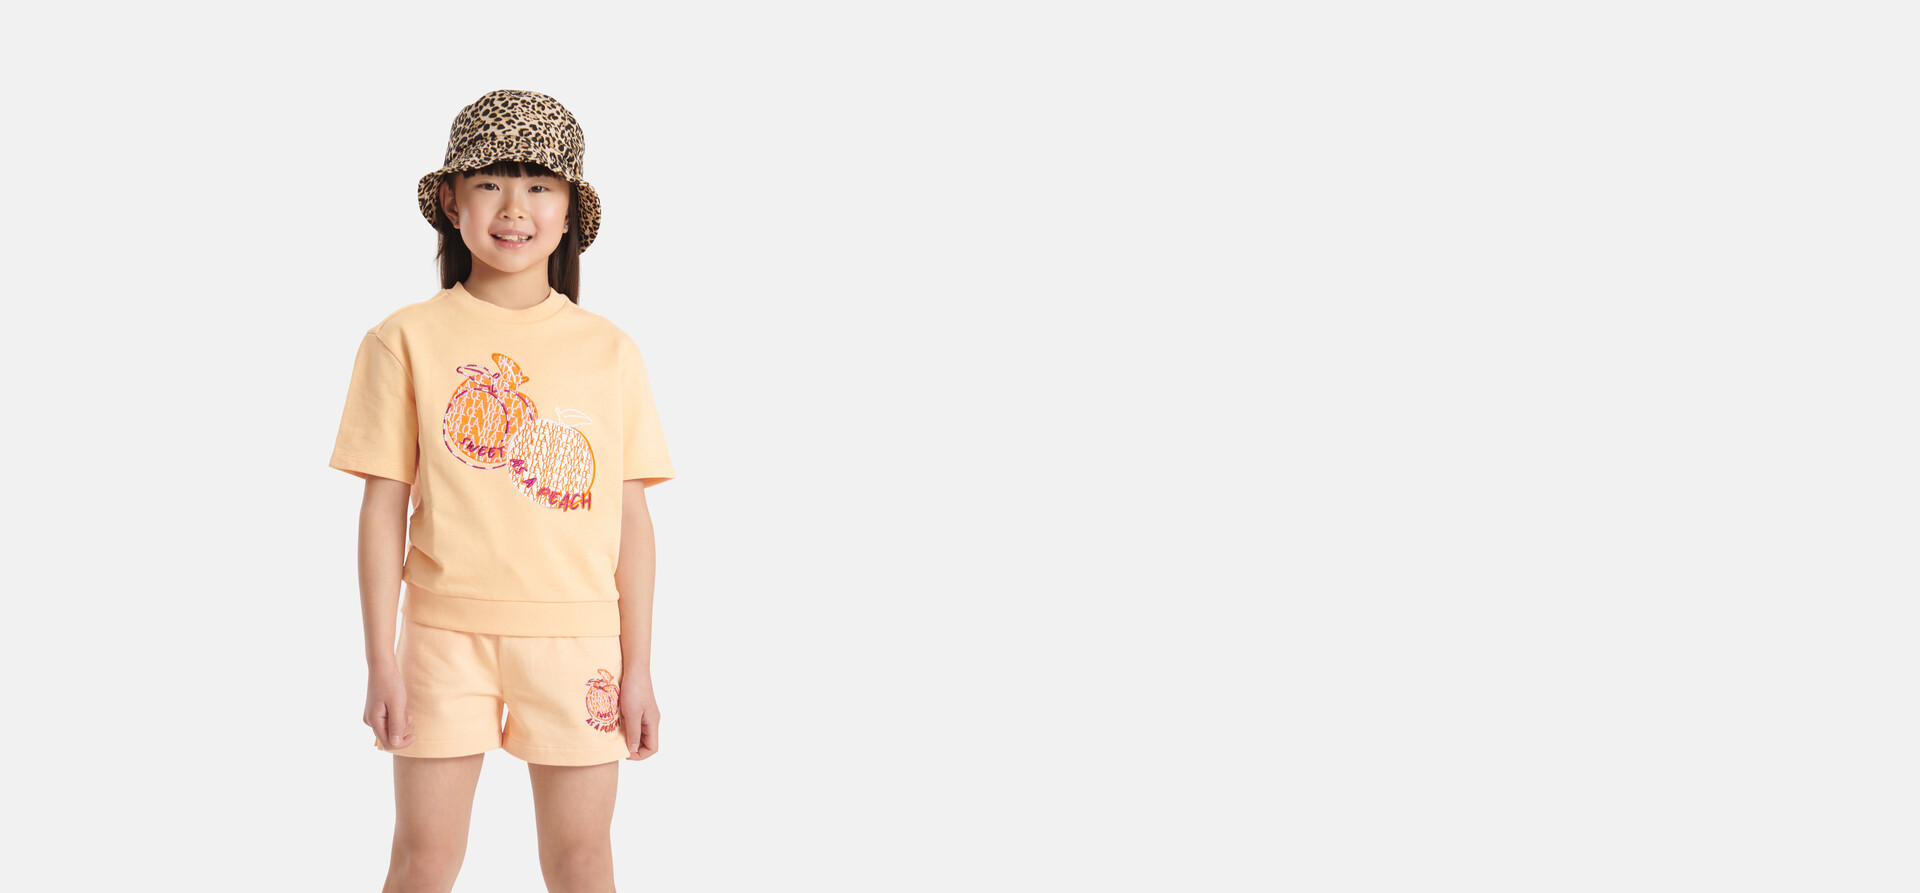 Artwork Sweat T-Shirt Orange SHOEBY GIRLS